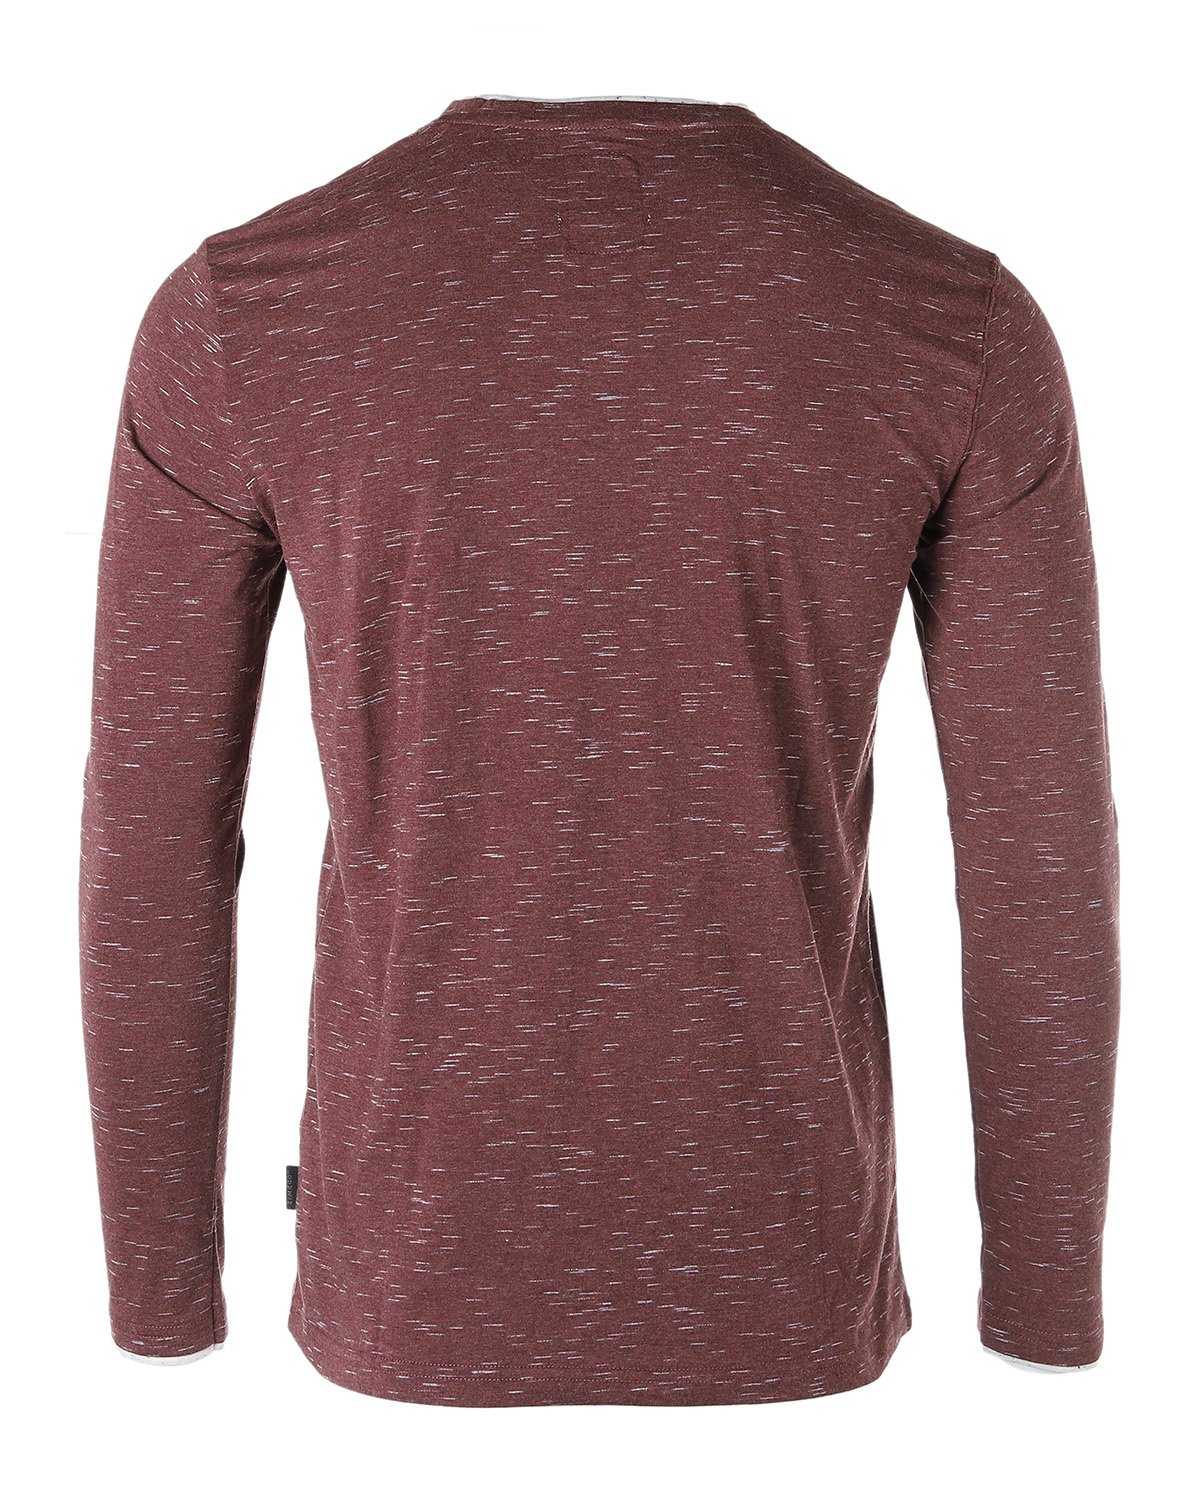 ZIMEGO Men’s Long Sleeve Athletic Fit V-Neck Activewear T-Shirt - image 4 of 6